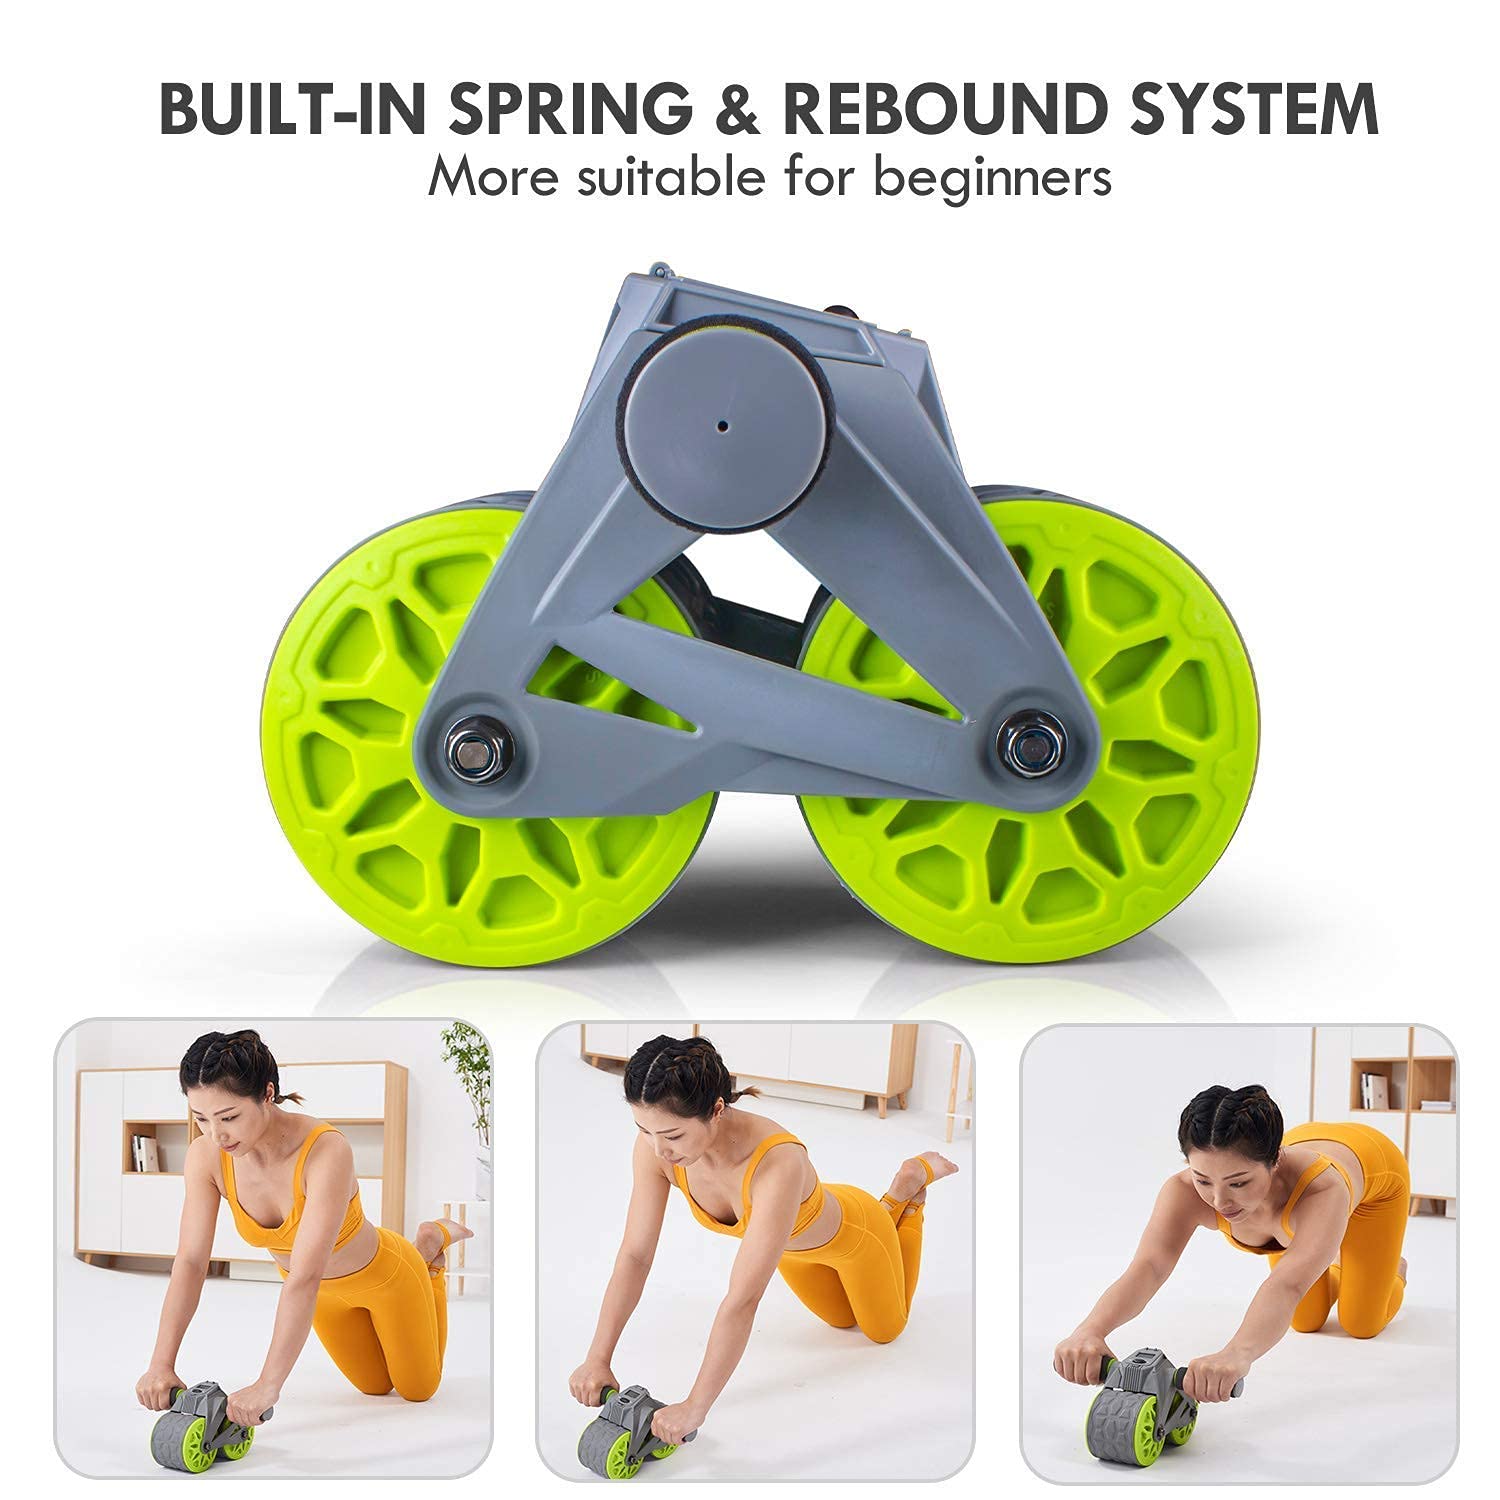 leikefitness Folding Exercise Bike and Ab Wheel Roller with Intelligent Display Bundle